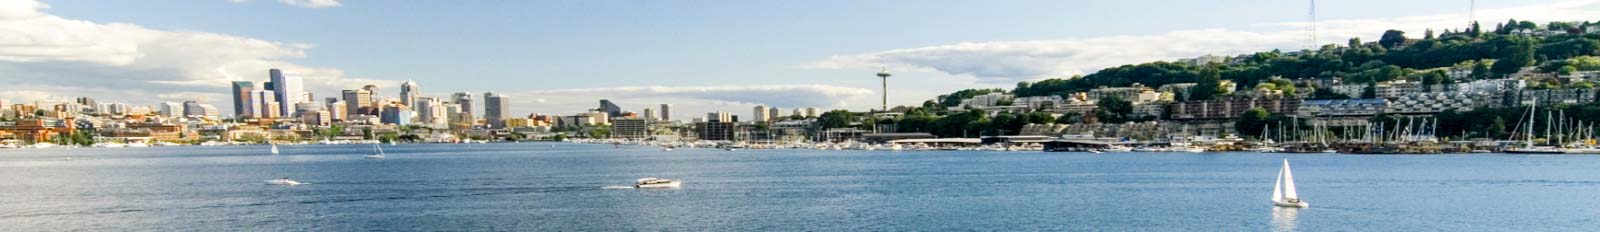 Seattle Waterfront Market Statistics